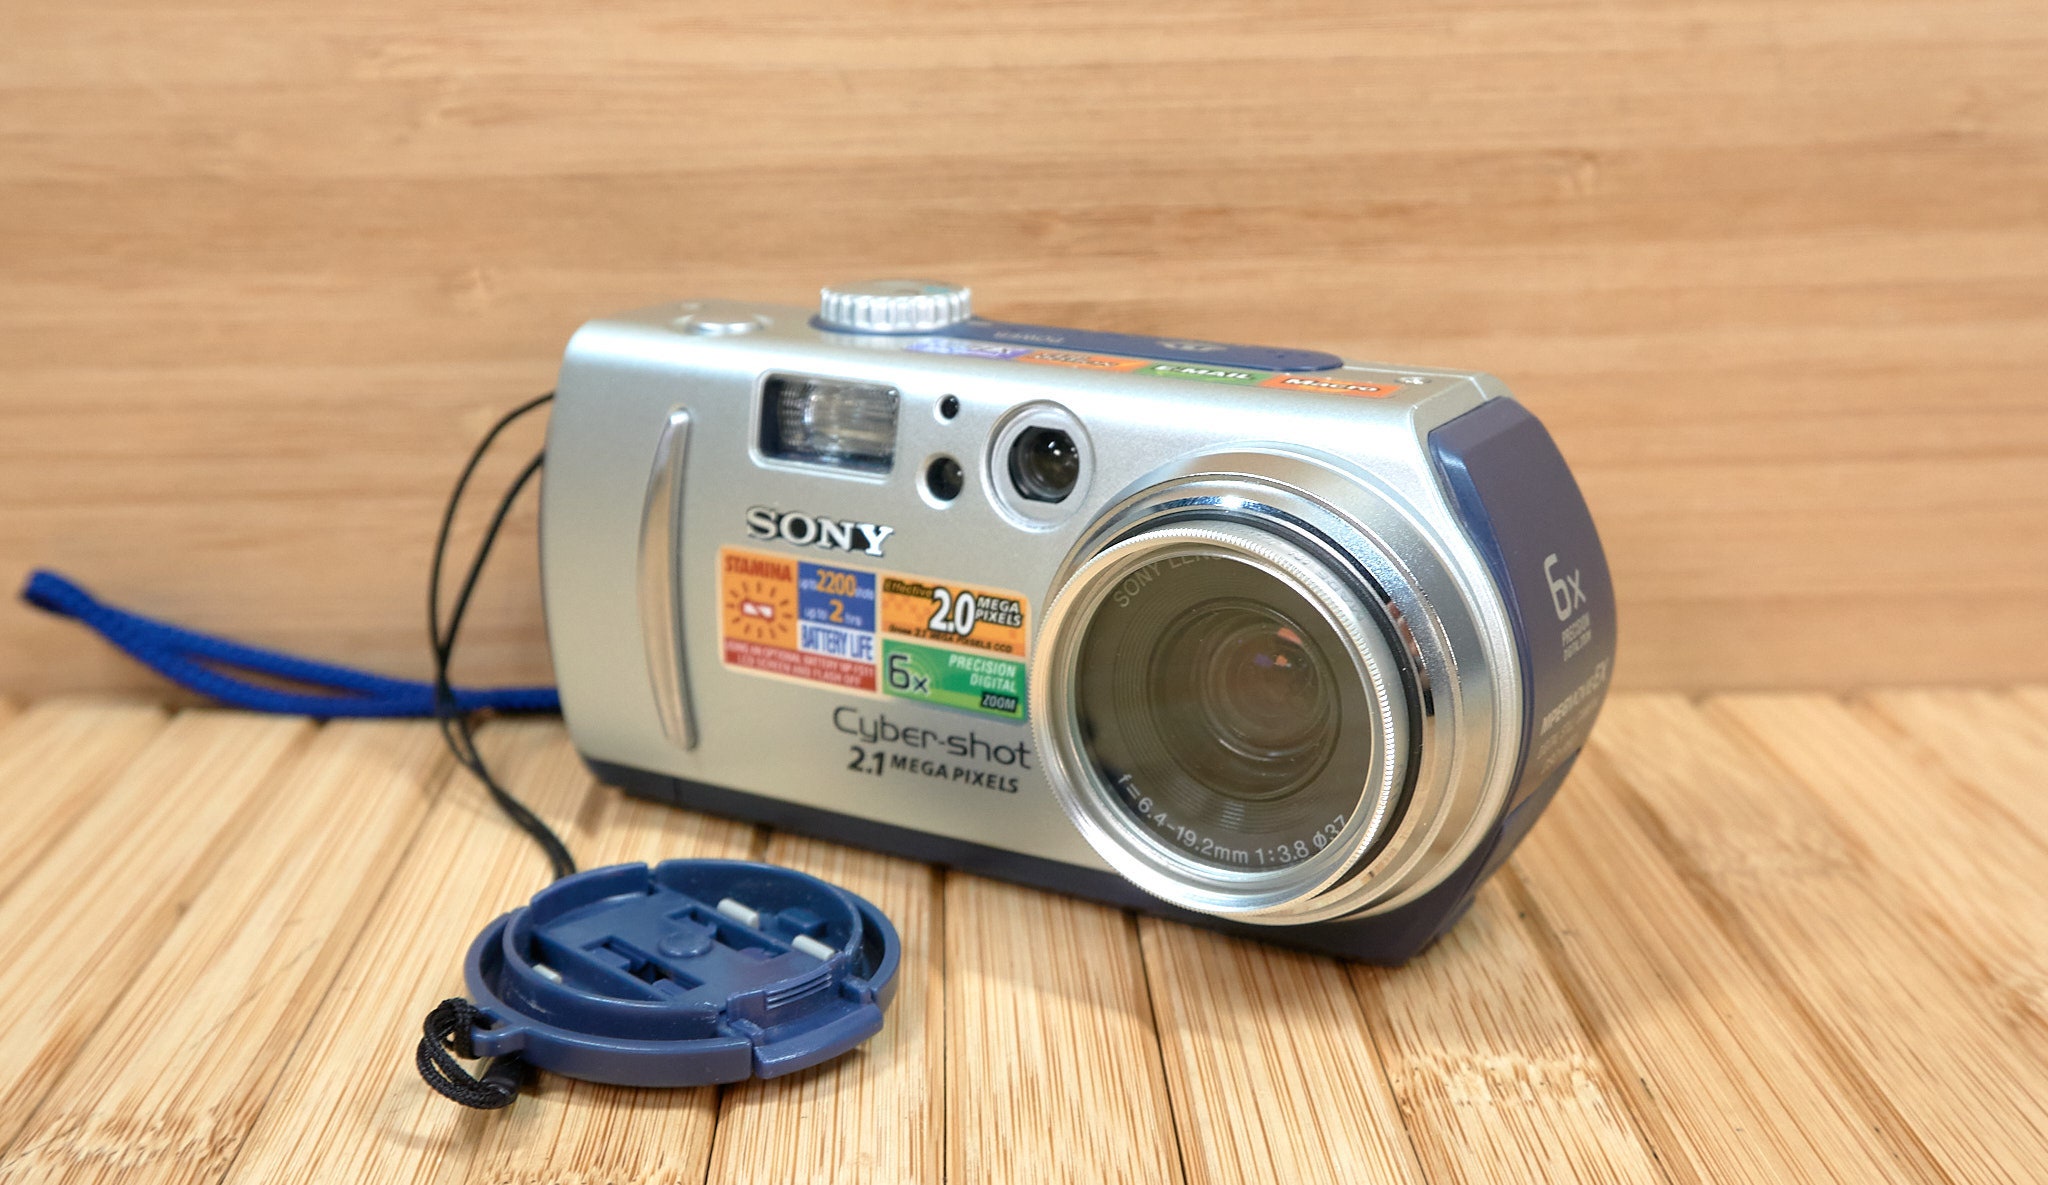 Nikon CoolPix 950 2.1MP Rotating Digital Camera -System Error, As-Is